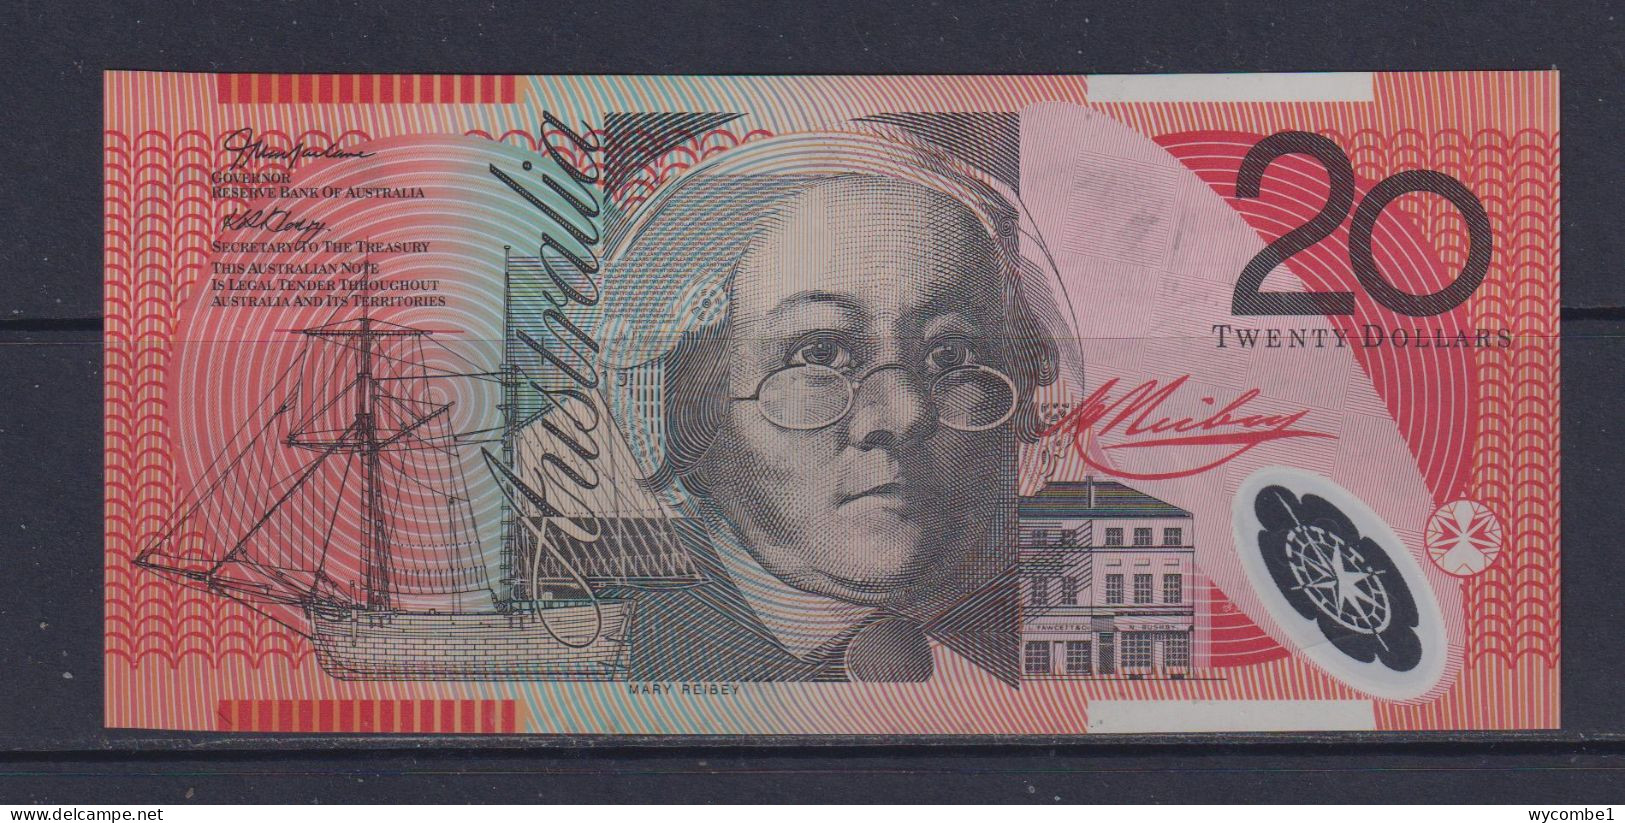 AUSTRALIA - 2006 20 Dollars AUNC/XF Banknote - 2005-... (Polymer)